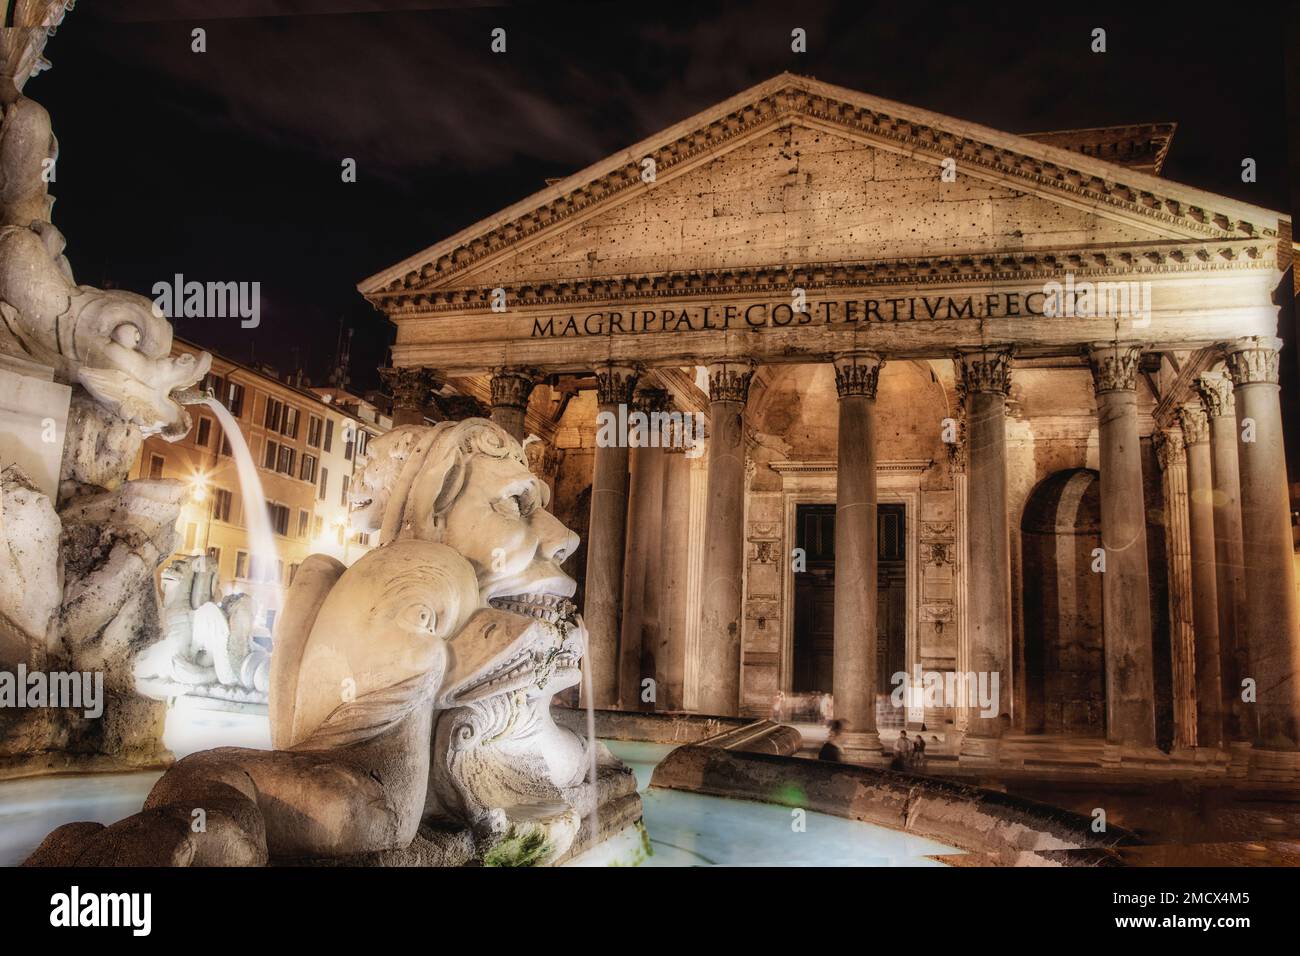 The fountain in the Piazza della Rotonda overlooks the Pantheon in Rome, Italy. Stock Photo